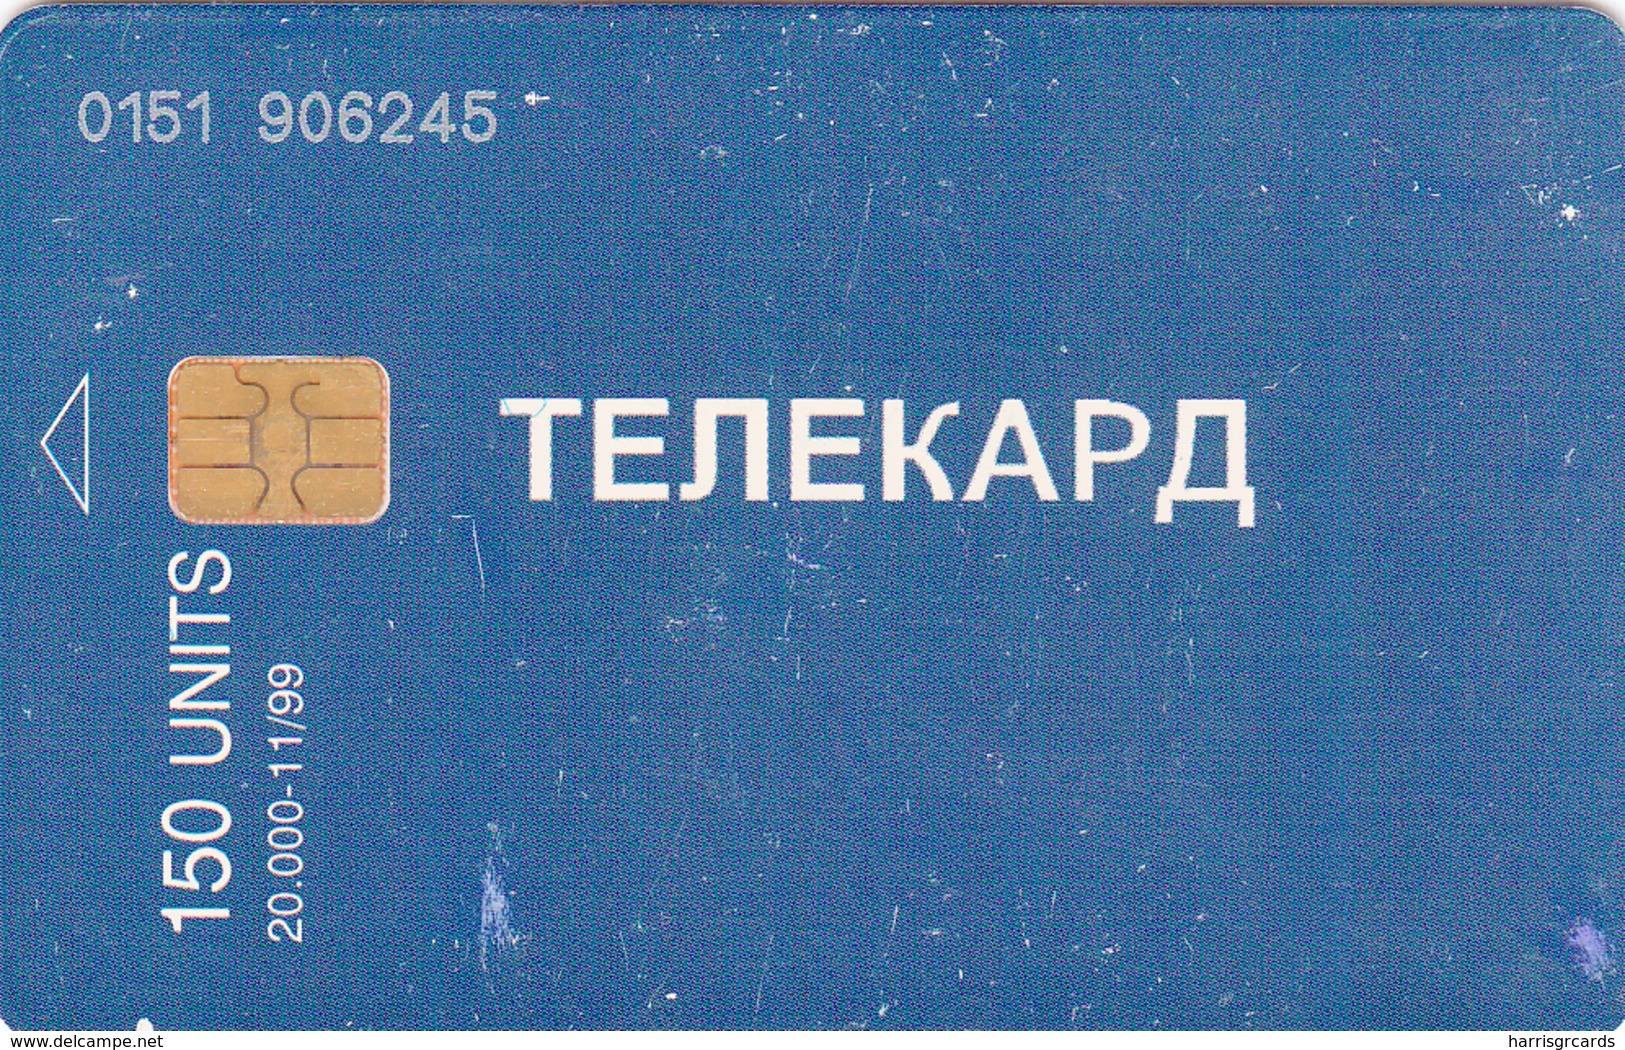 BOSNIA - Republica Srpska Telecard, Blue Card, 11/99, 150 U, Tirage 20,000, Used As Scan - Bosnia